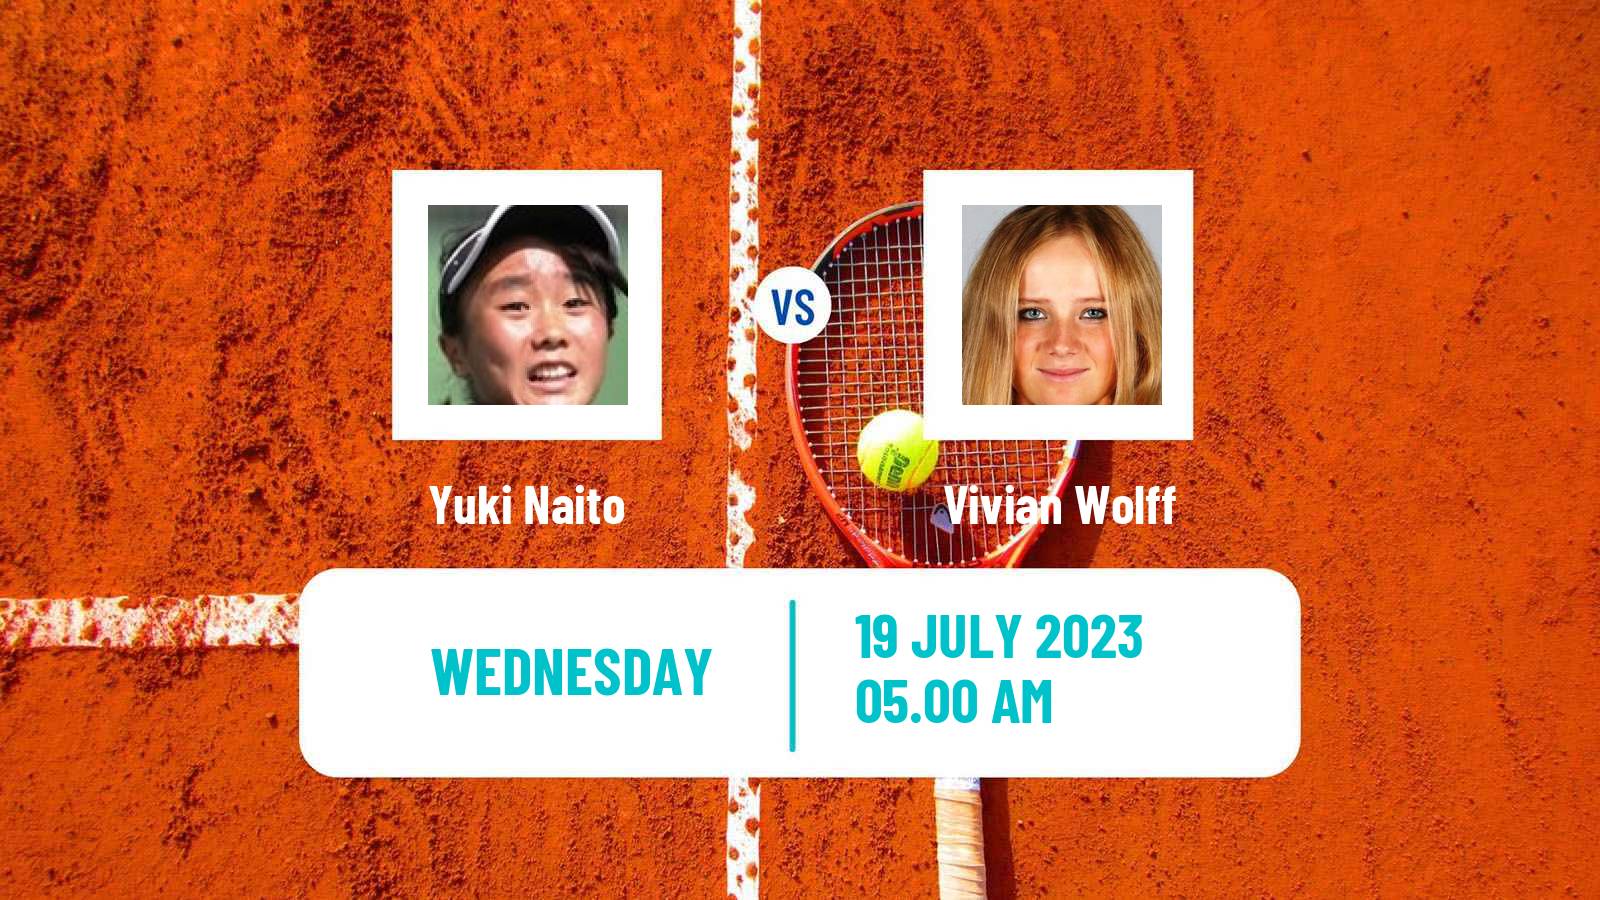 Tennis ITF W25 Darmstadt Women Yuki Naito - Vivian Wolff